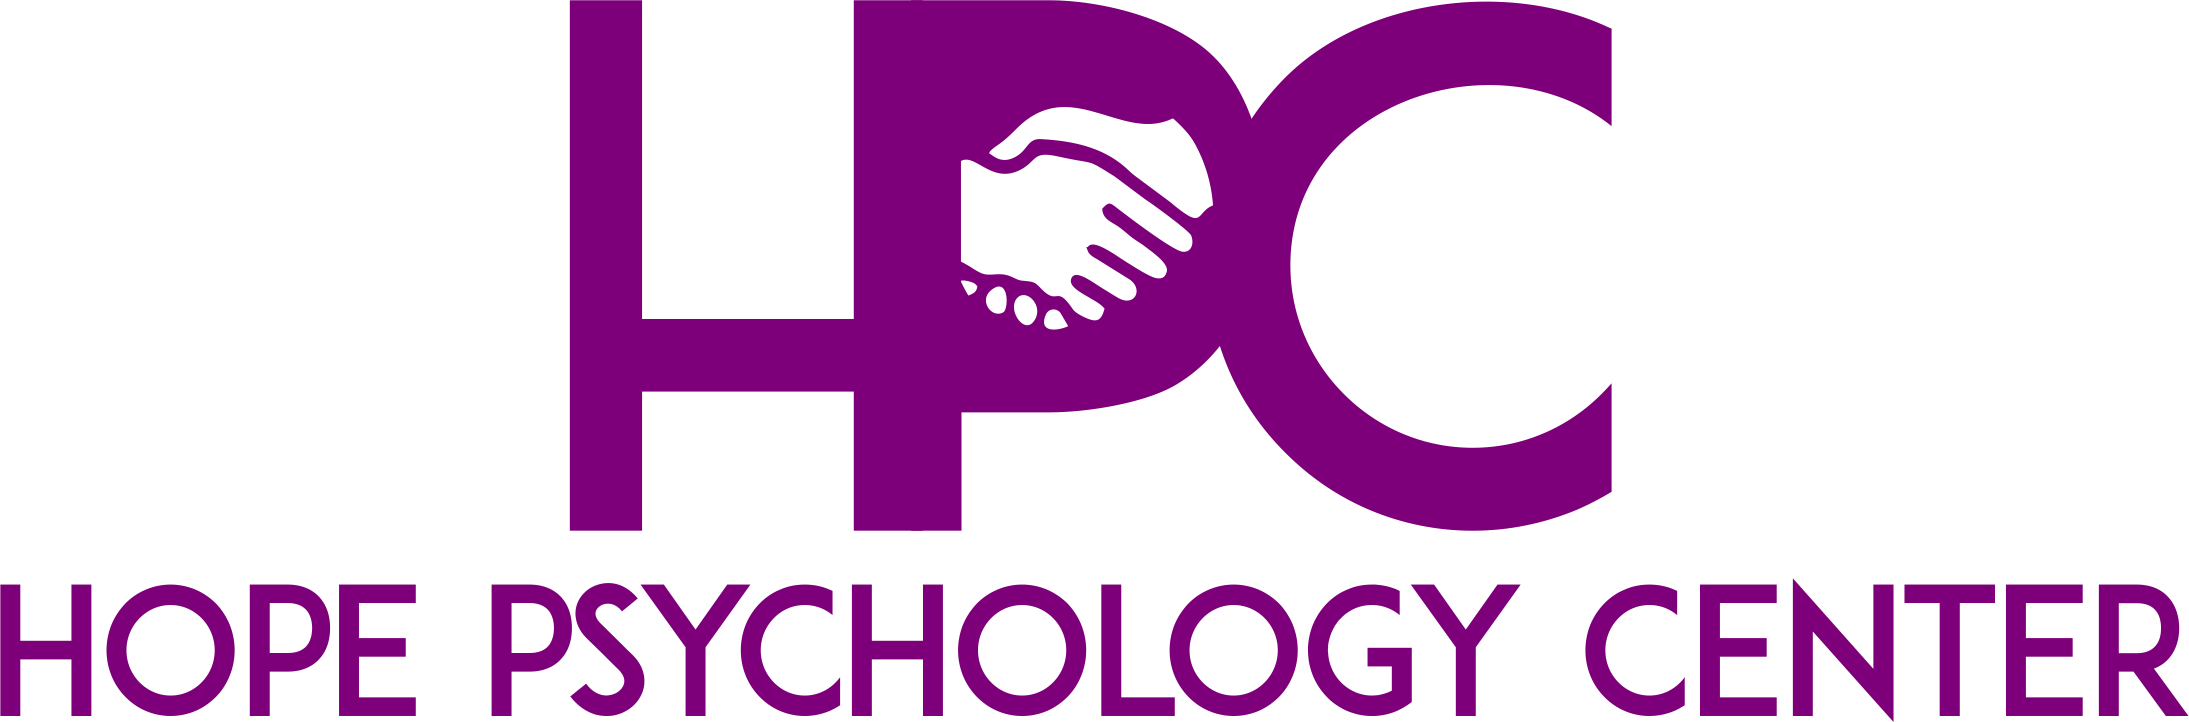 Hope Psychology Center